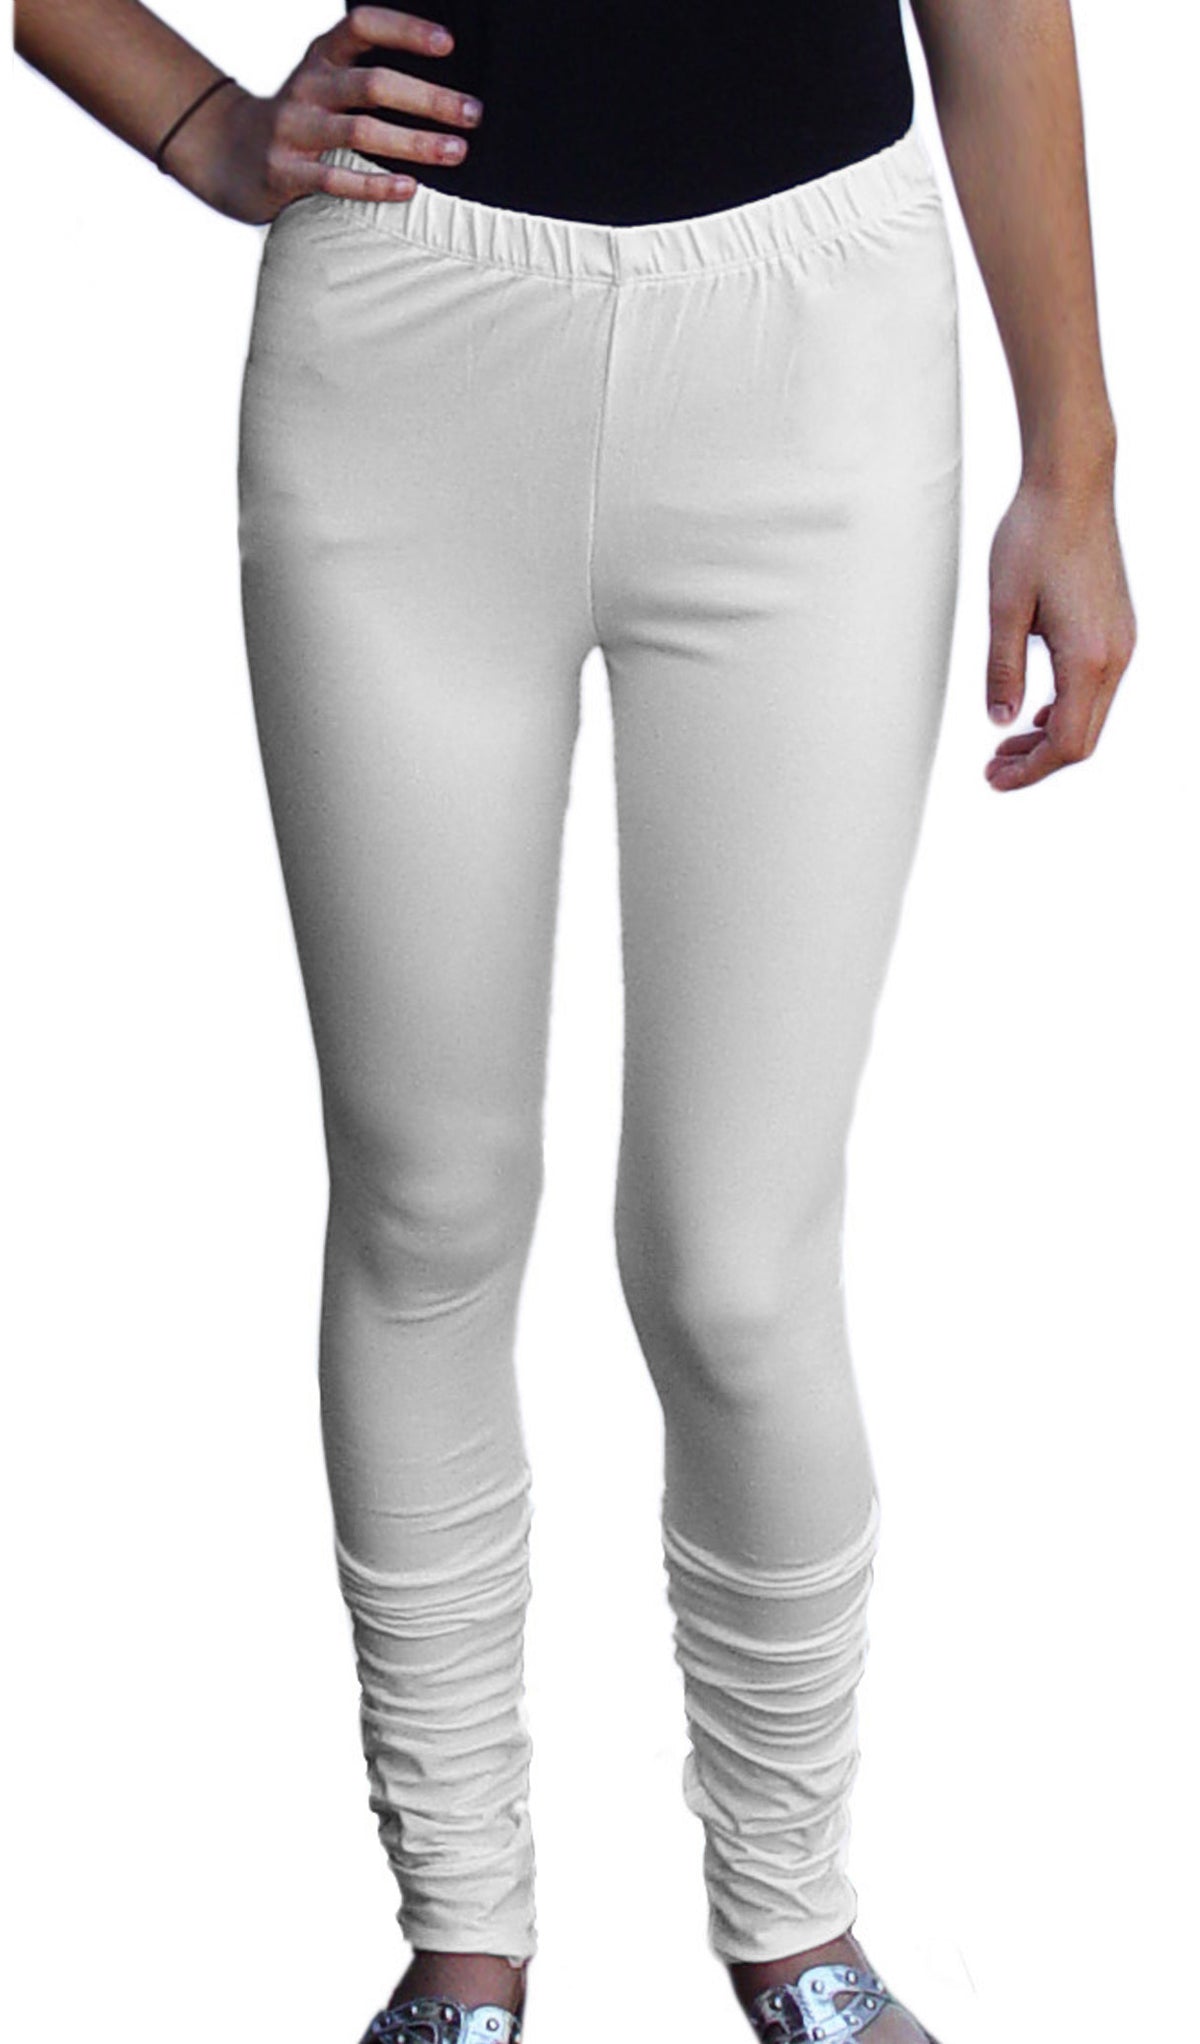 UZON Full Length Pure Cotton Lycra Leggings, Solid White Color